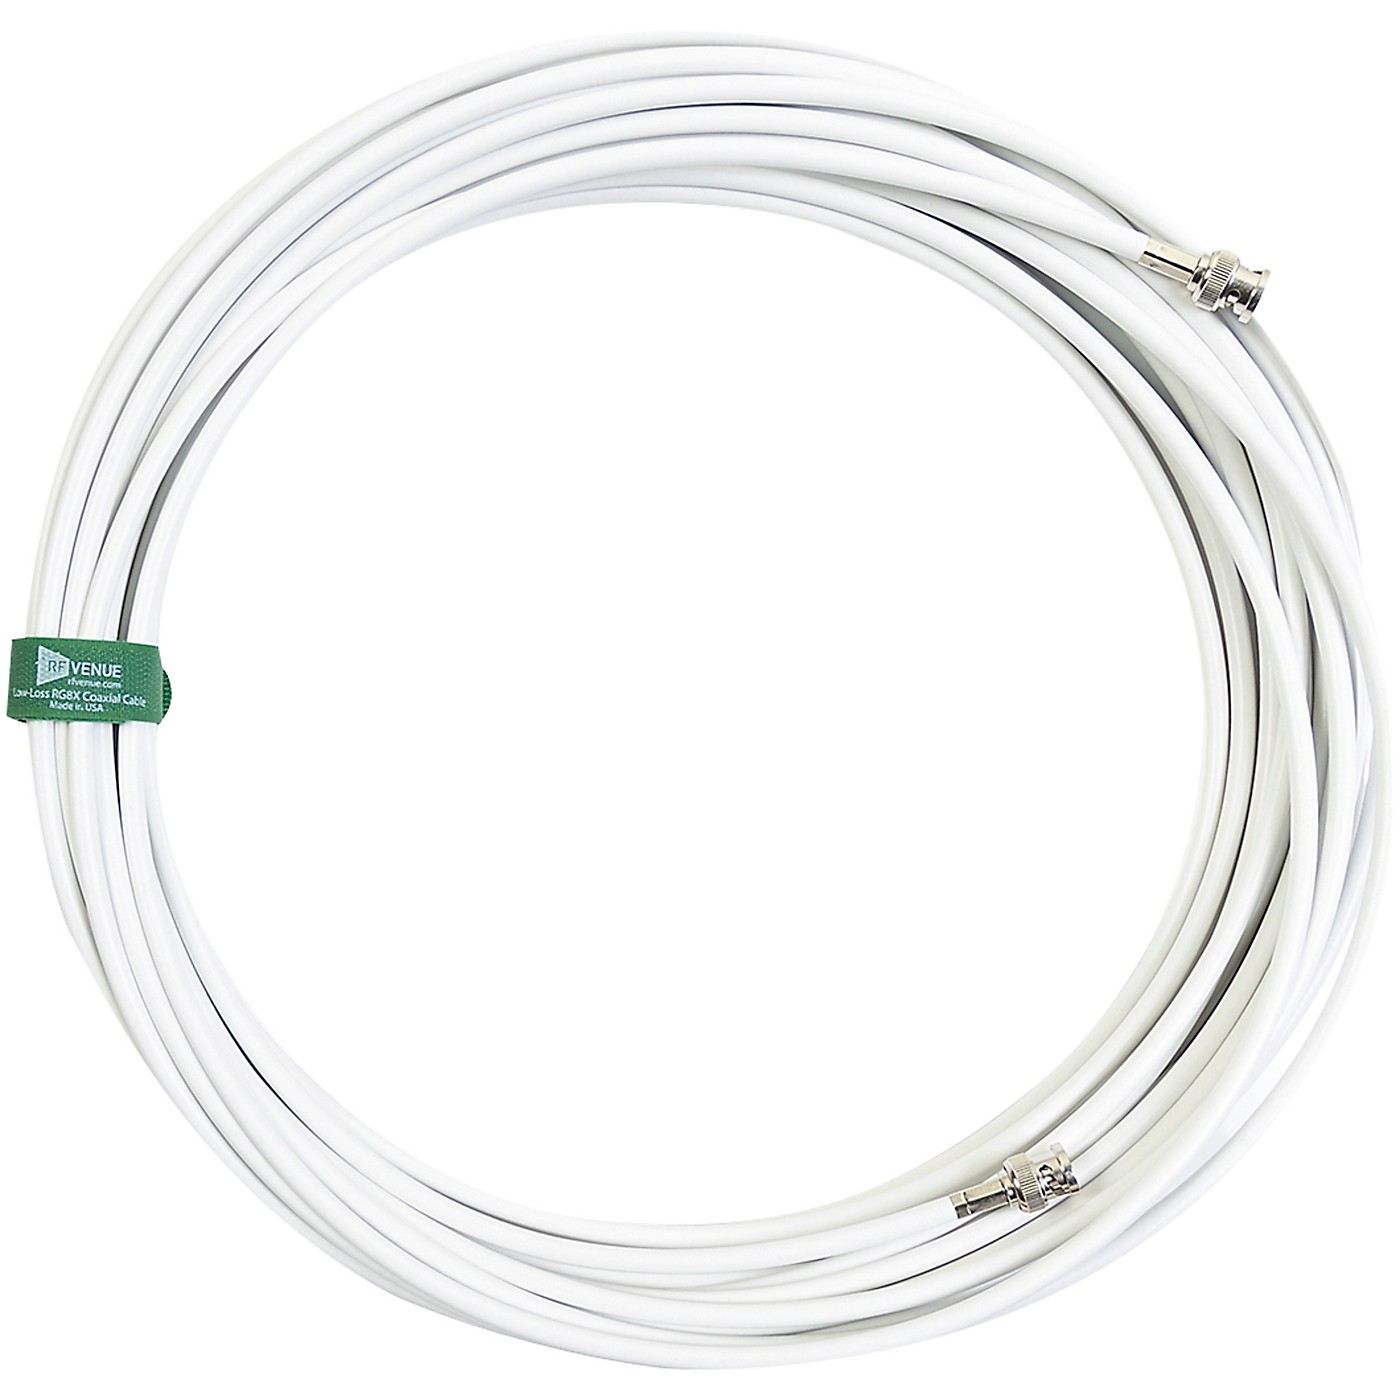 RF Venue RG8X Coaxial Cable - 50' thumbnail